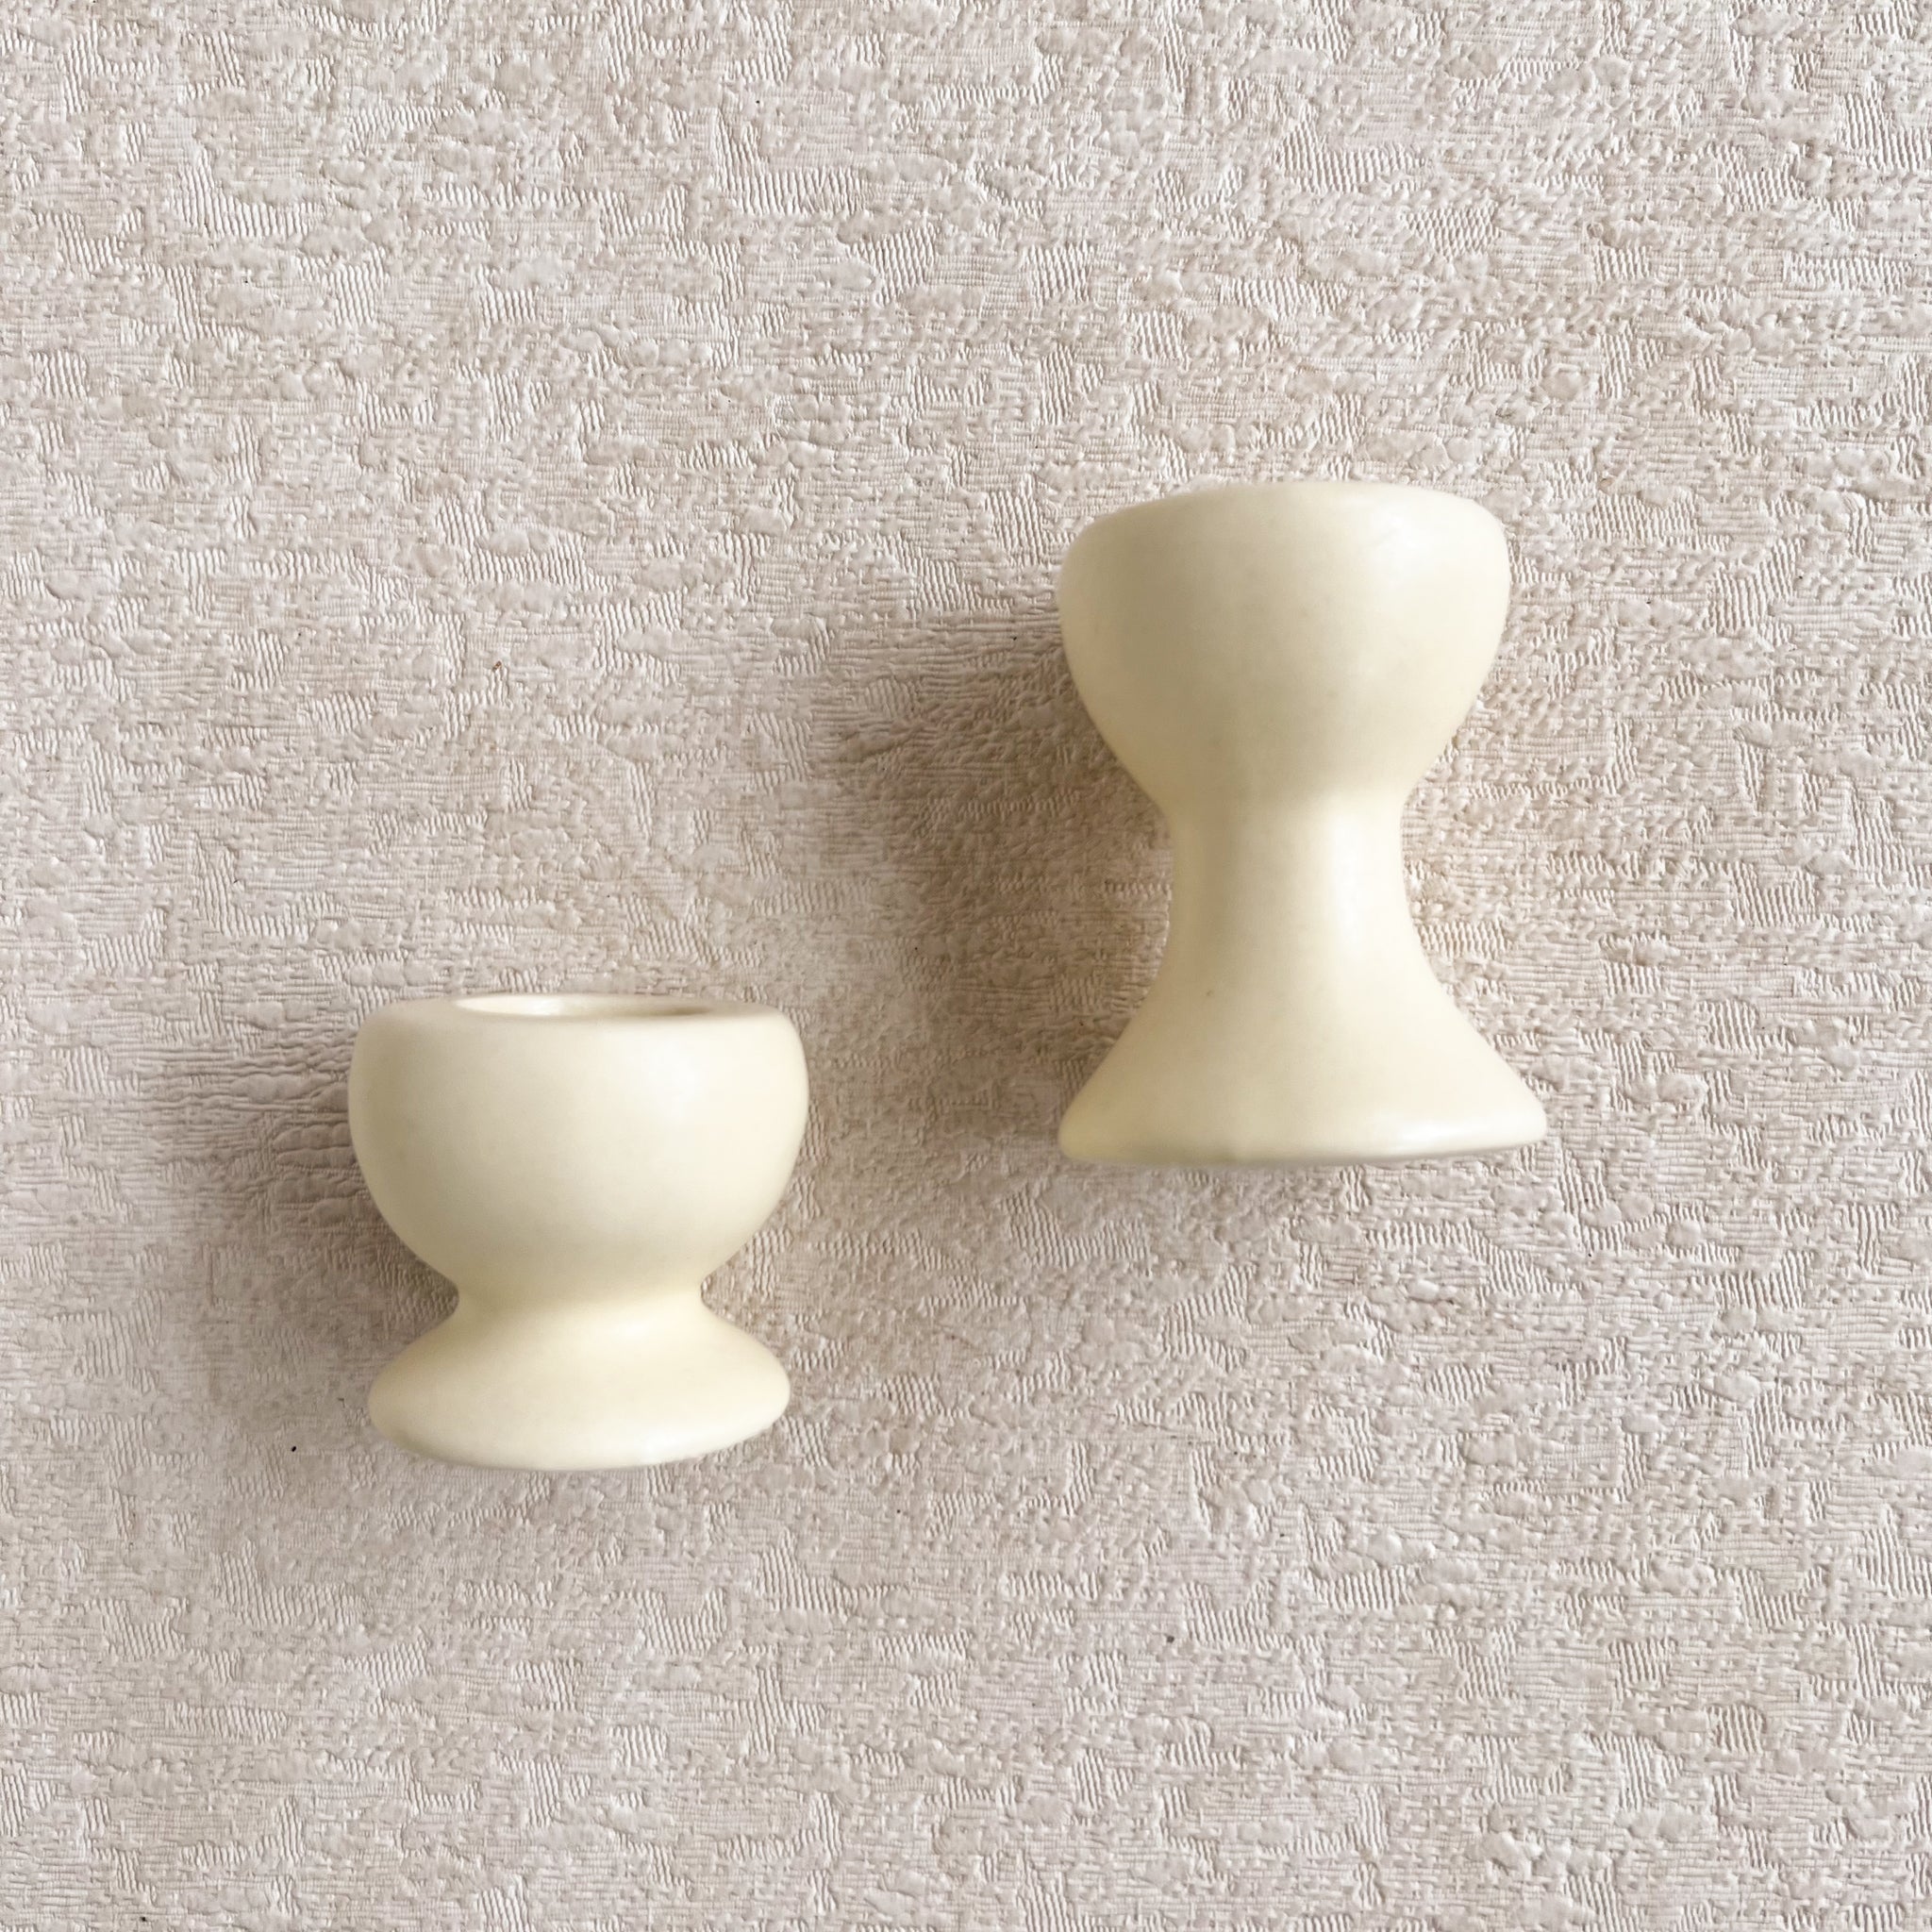 Ceramic Taper Candle Holder